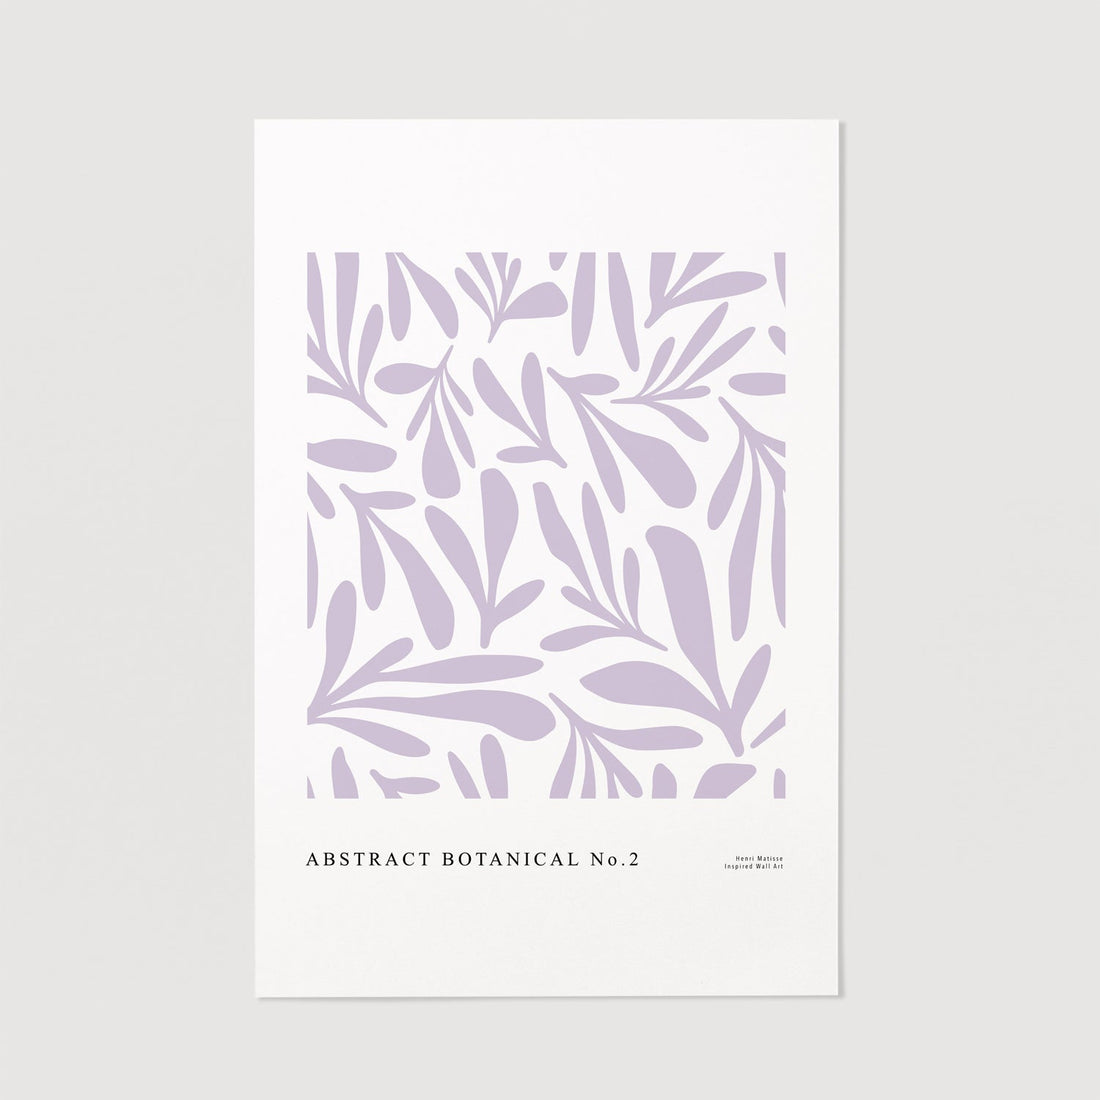 pastel purple leaves motif art print poster design